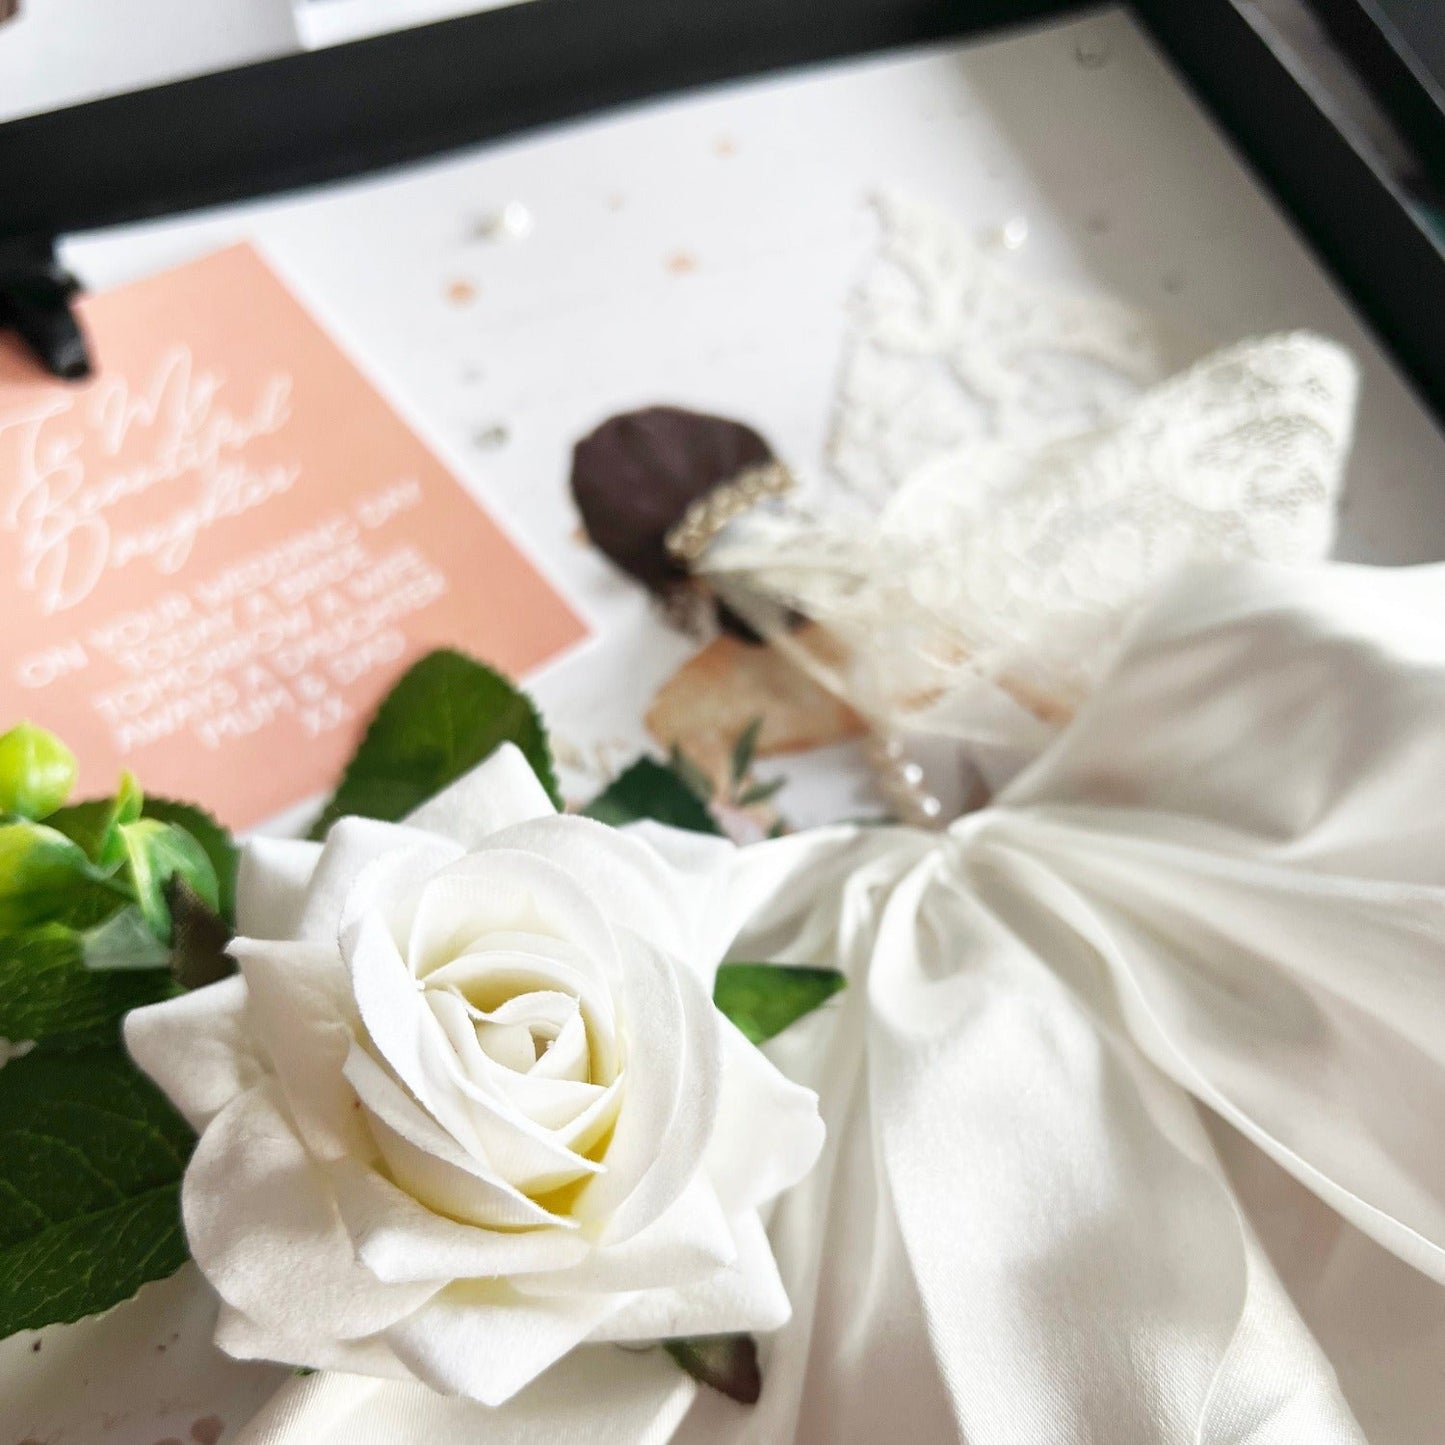 Ivory rose wedding card for Niece on wedding day | Luxury keepsake wedding cards personalised with wording